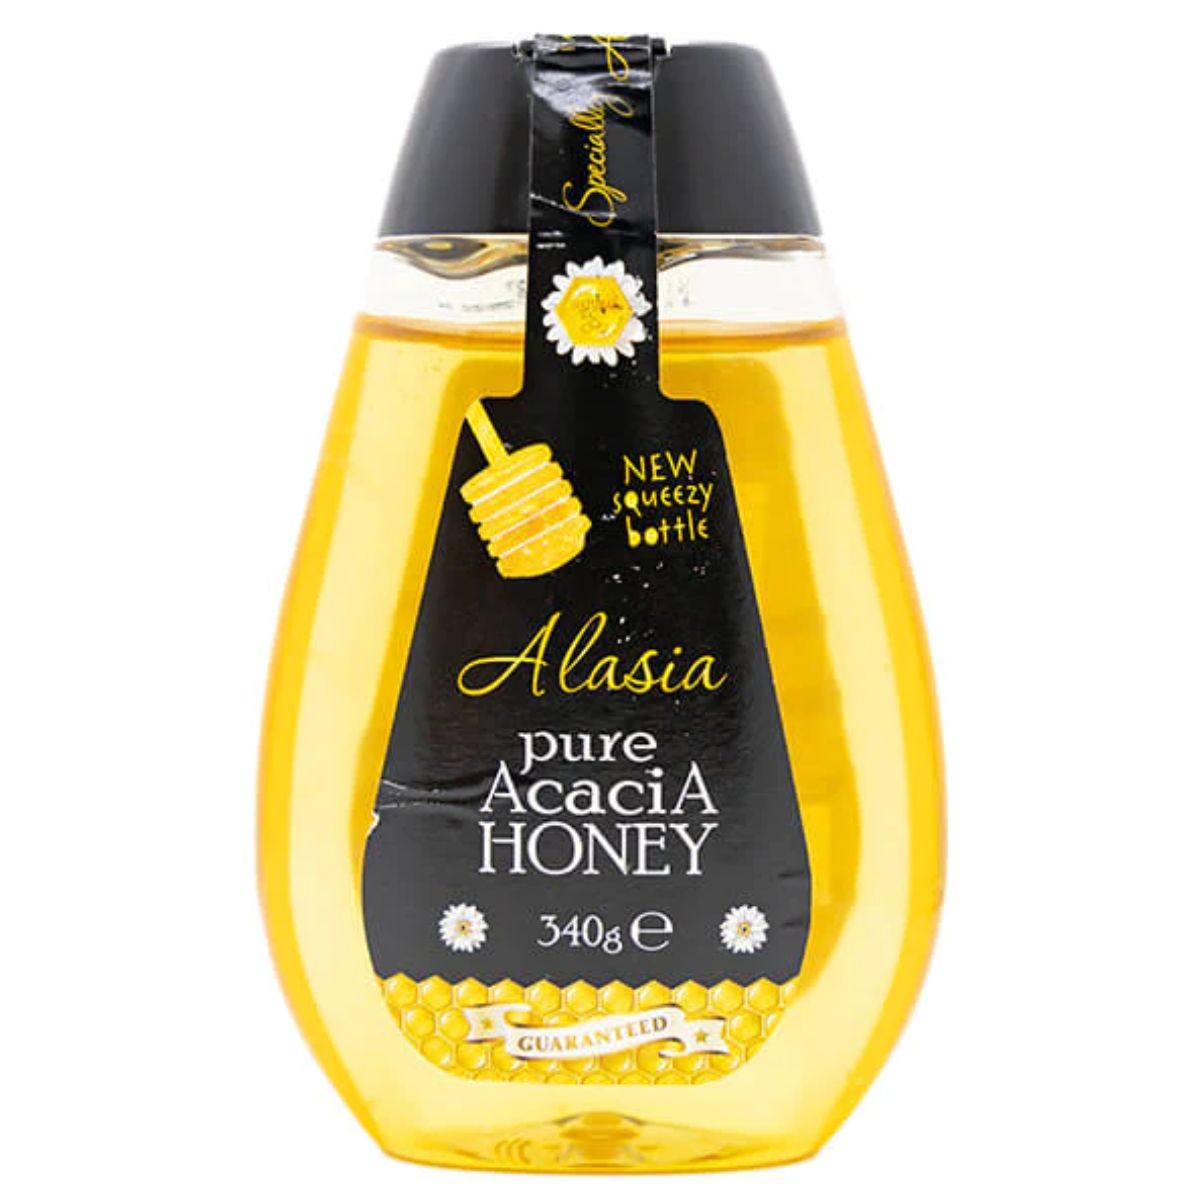 Bottle of Alacia - Pure Acacia Honey - 340g with a squeezable dispenser.